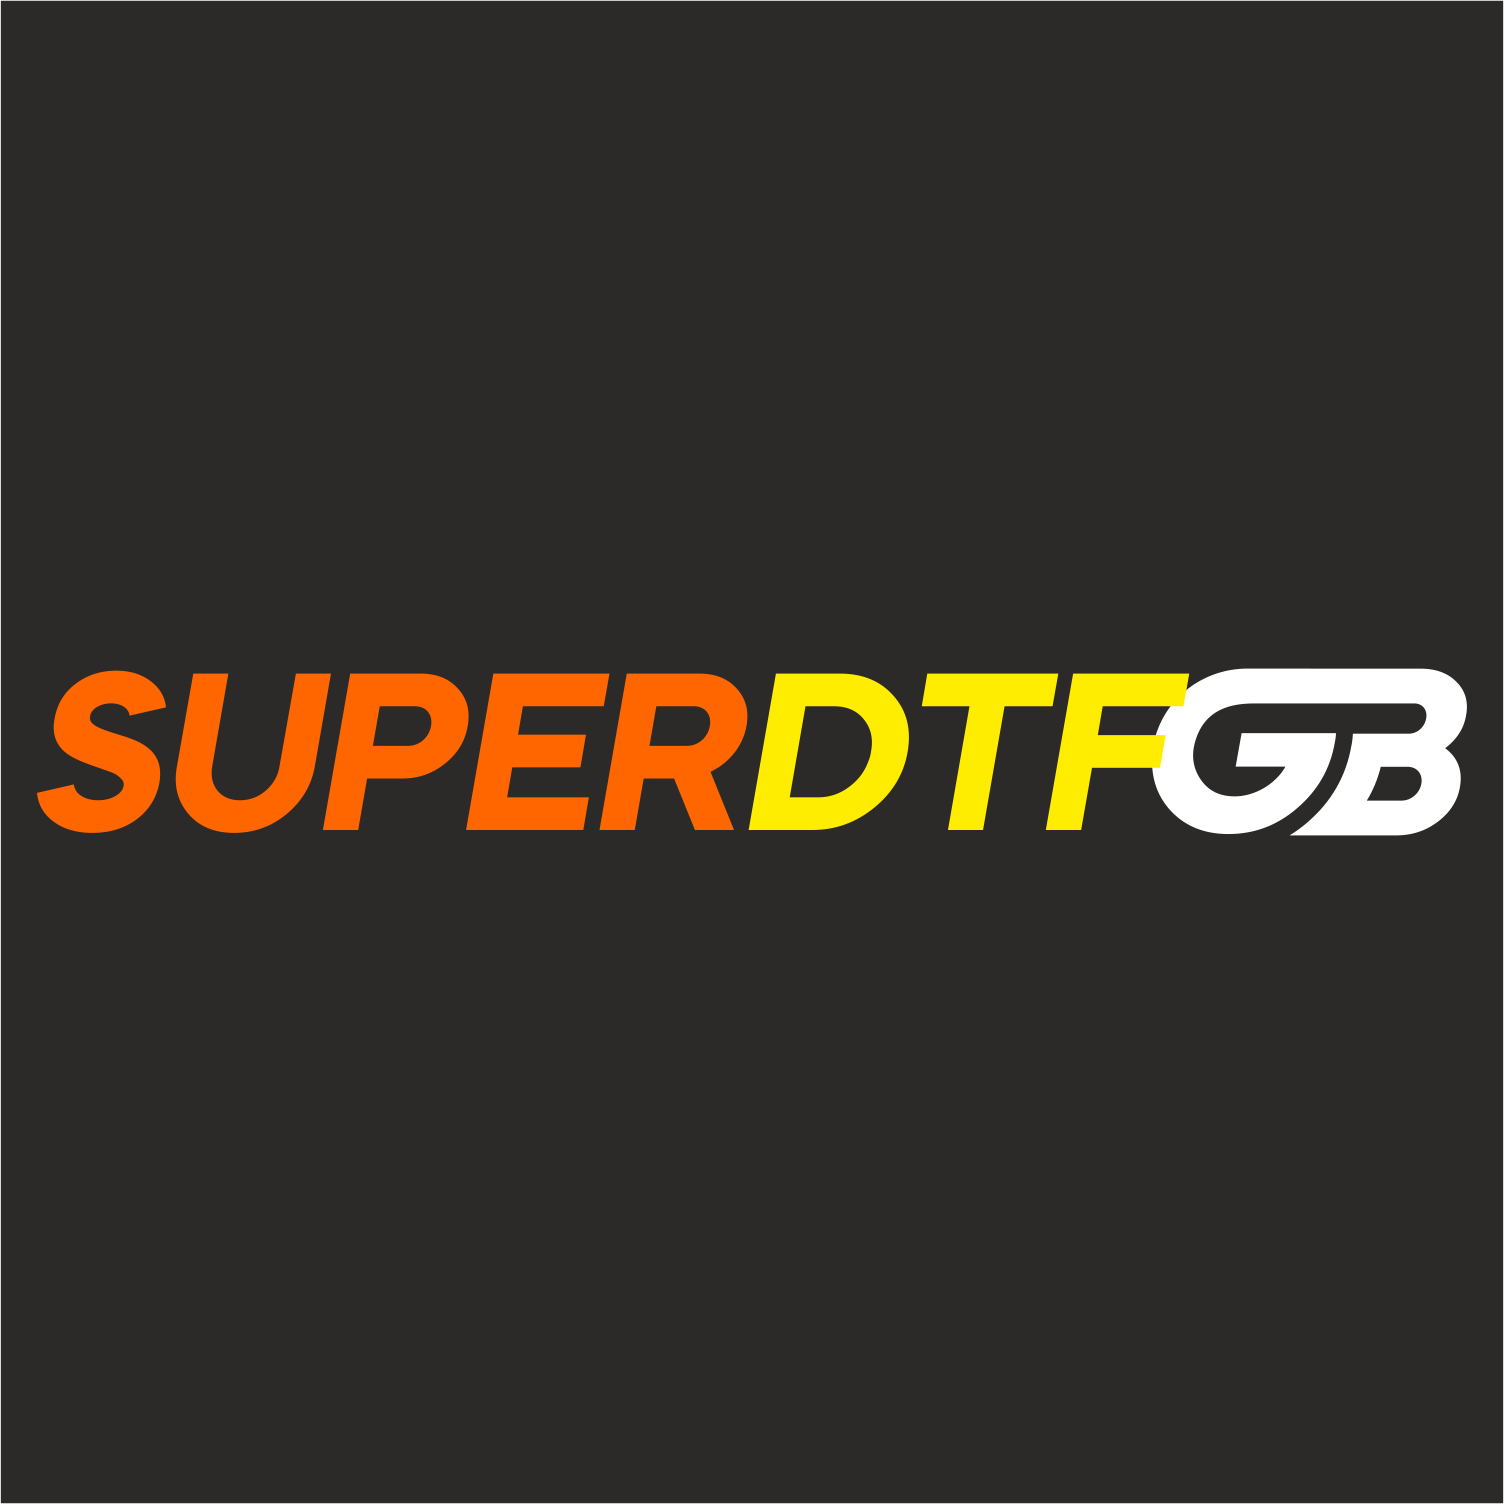 SuperDTF GB